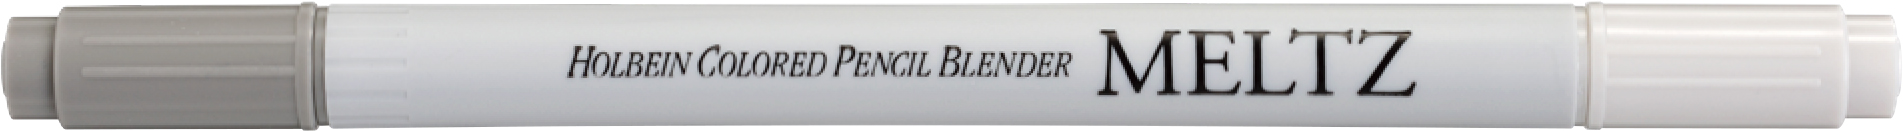 Holbein Meltz Colored Pencil Blender Pen